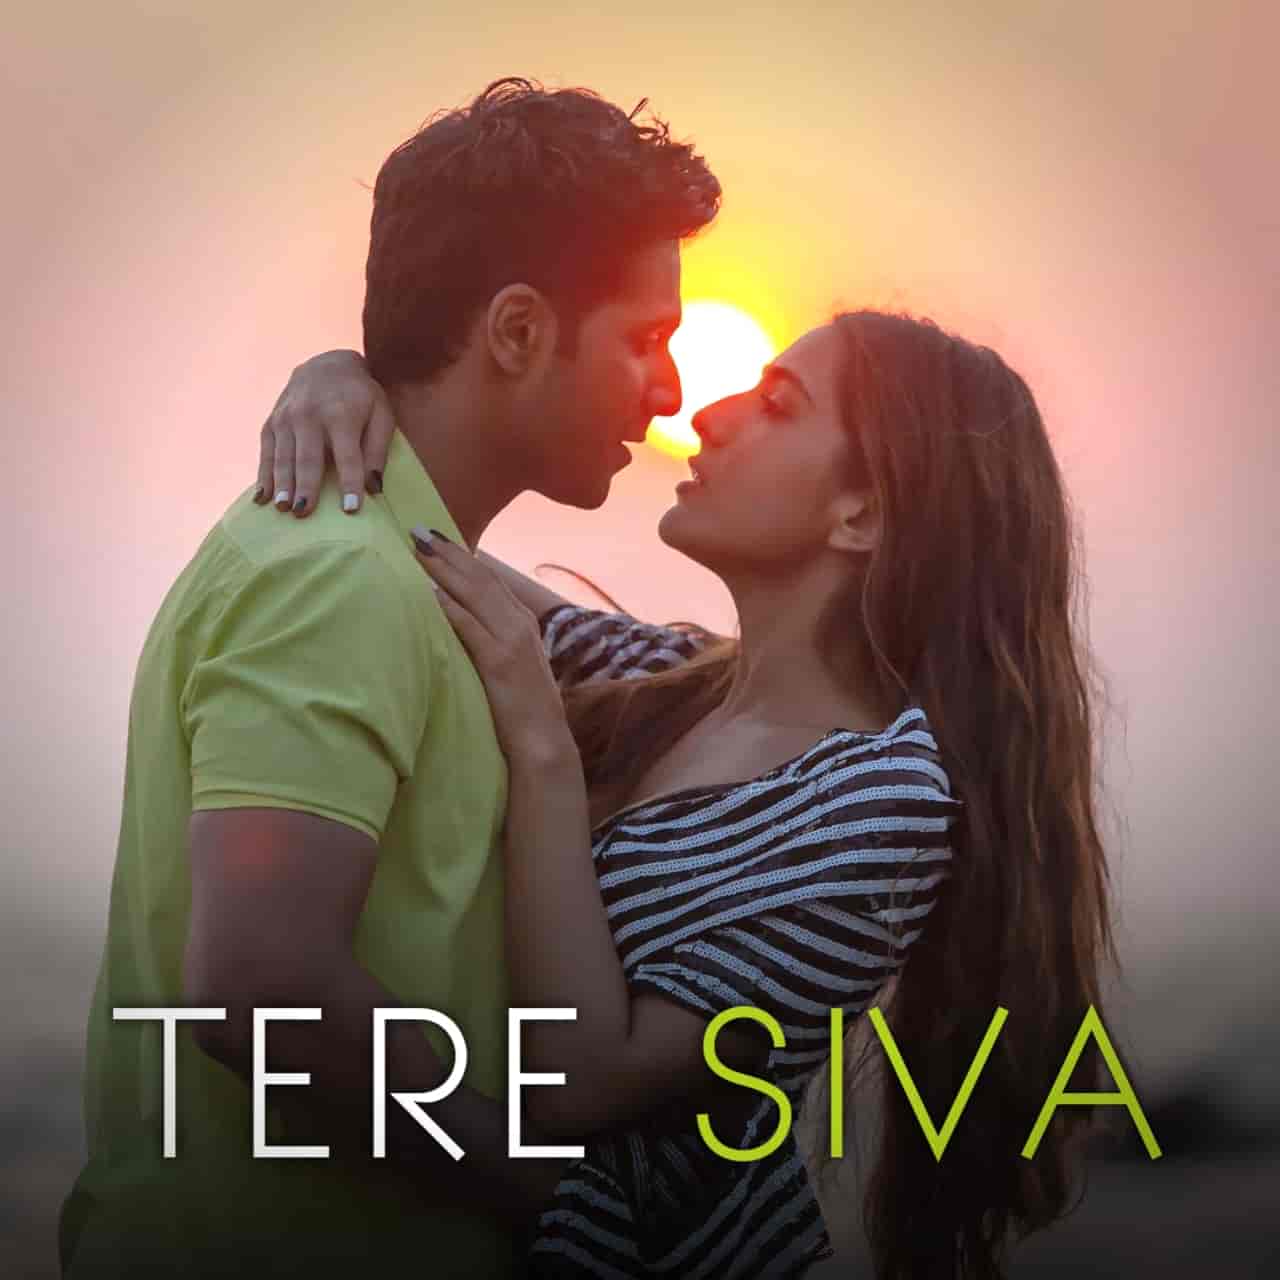 Tere Siva Hindi Song Image Features Varun Dhawan and Sara Ali Khan From Movie Coolie No.1